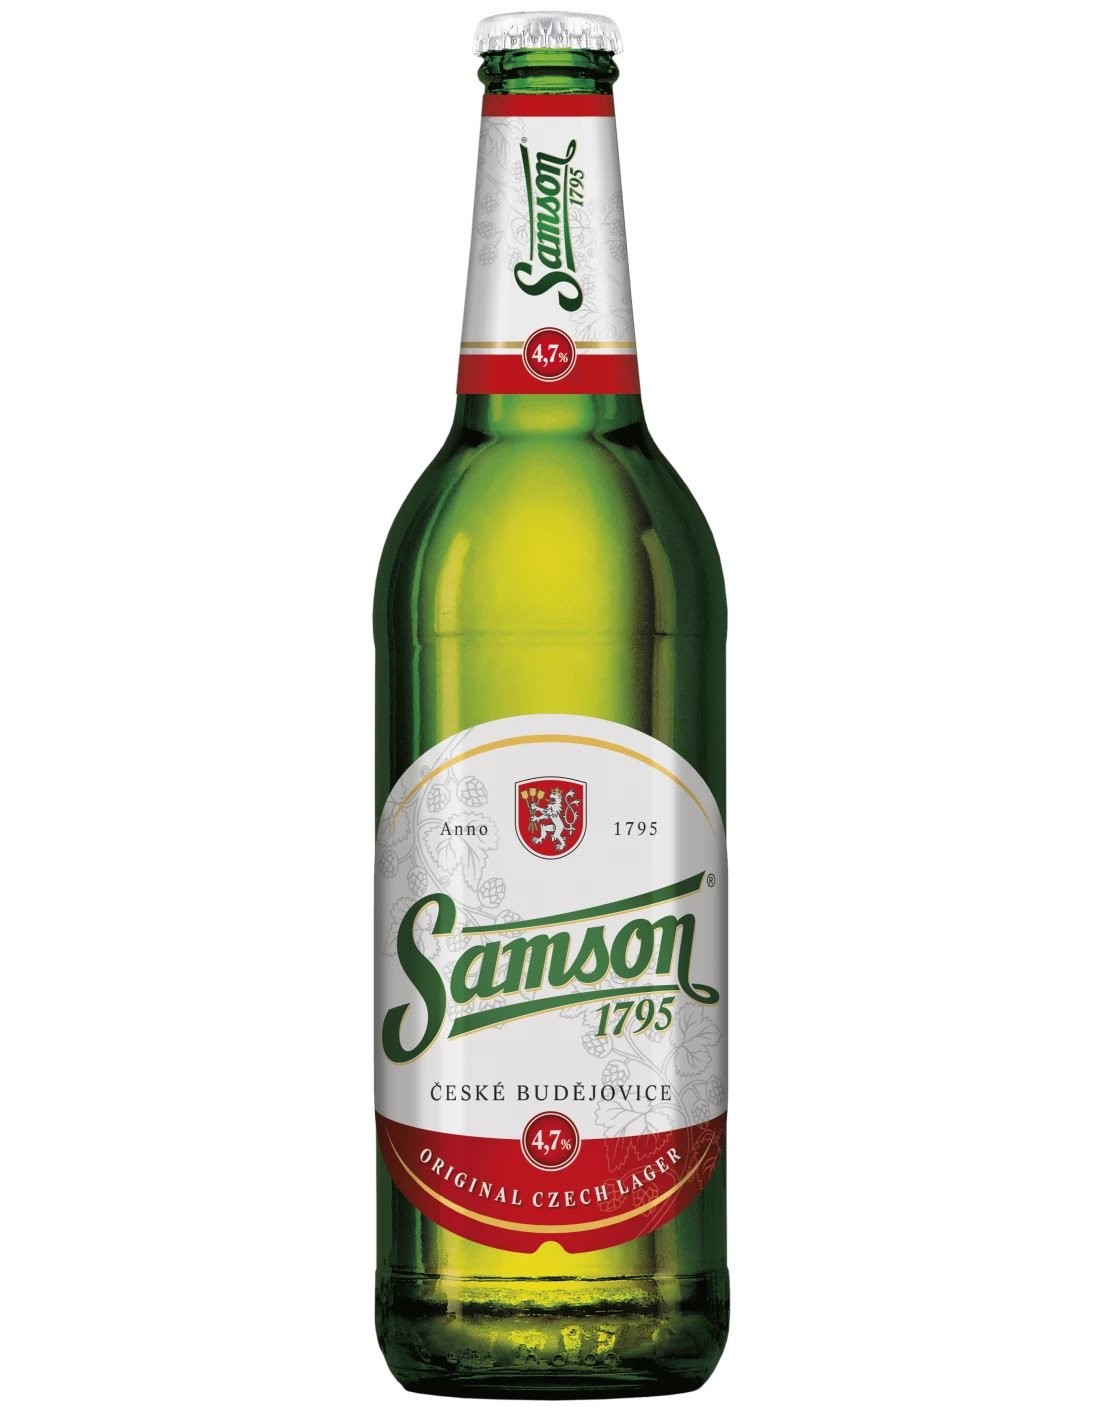 Bere blonda Samson 1795 Original Czech Lager, 4.7% alc., 0.5L, Cehia alcooldiscount.ro